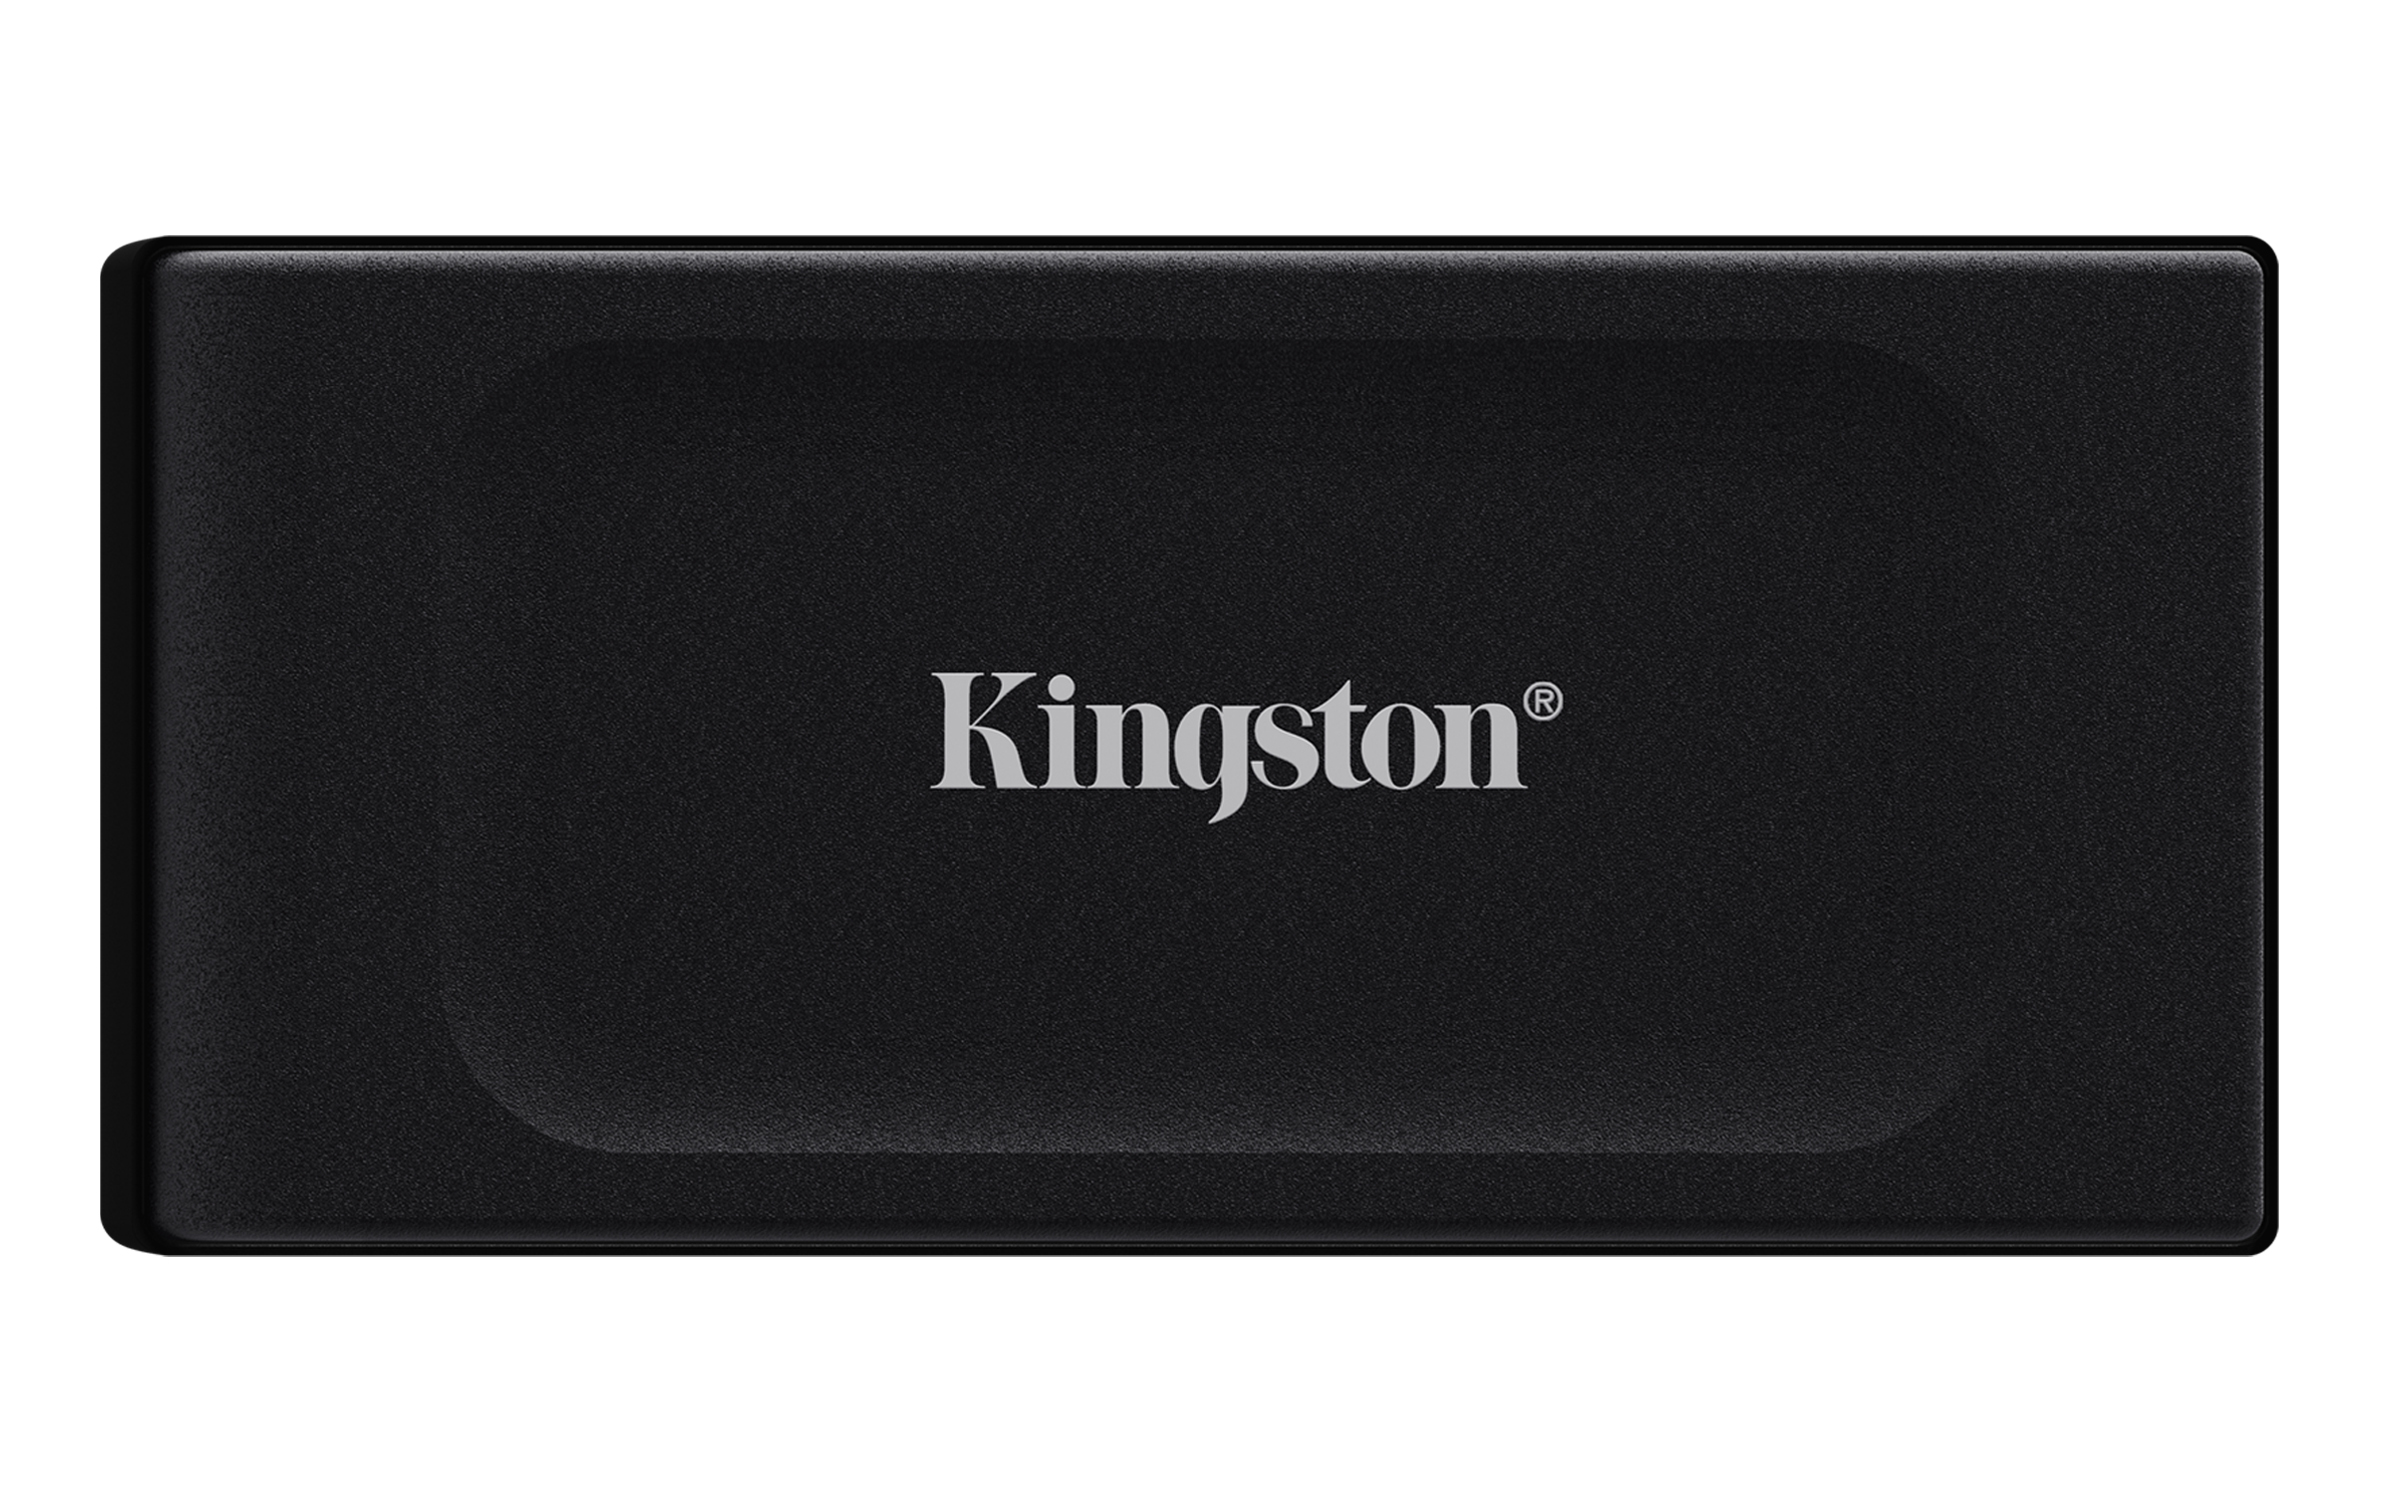 Kingston - SSD Externo Kingston XS1000 2TB USB3.2 Gen2 Negro (1050/1000MB/s)